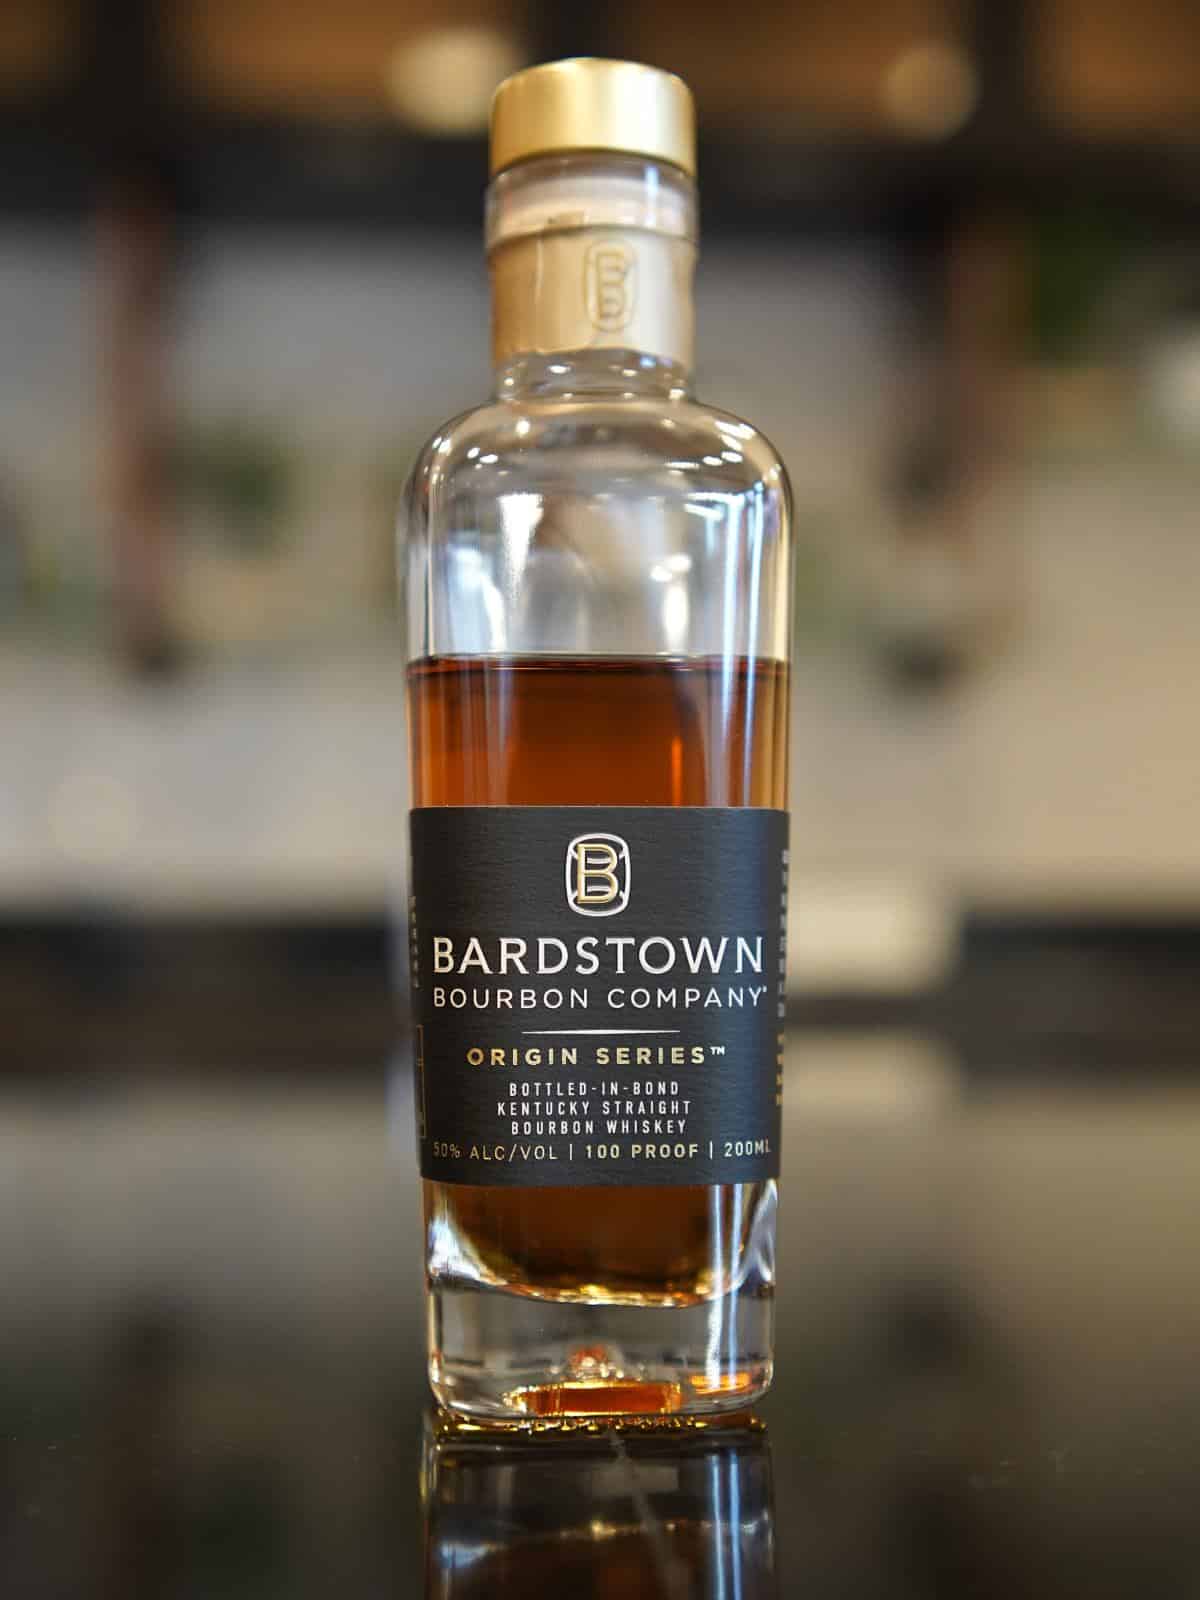 Bardstown Bourbon Company Origin Bottled in Bond Bourbon featured